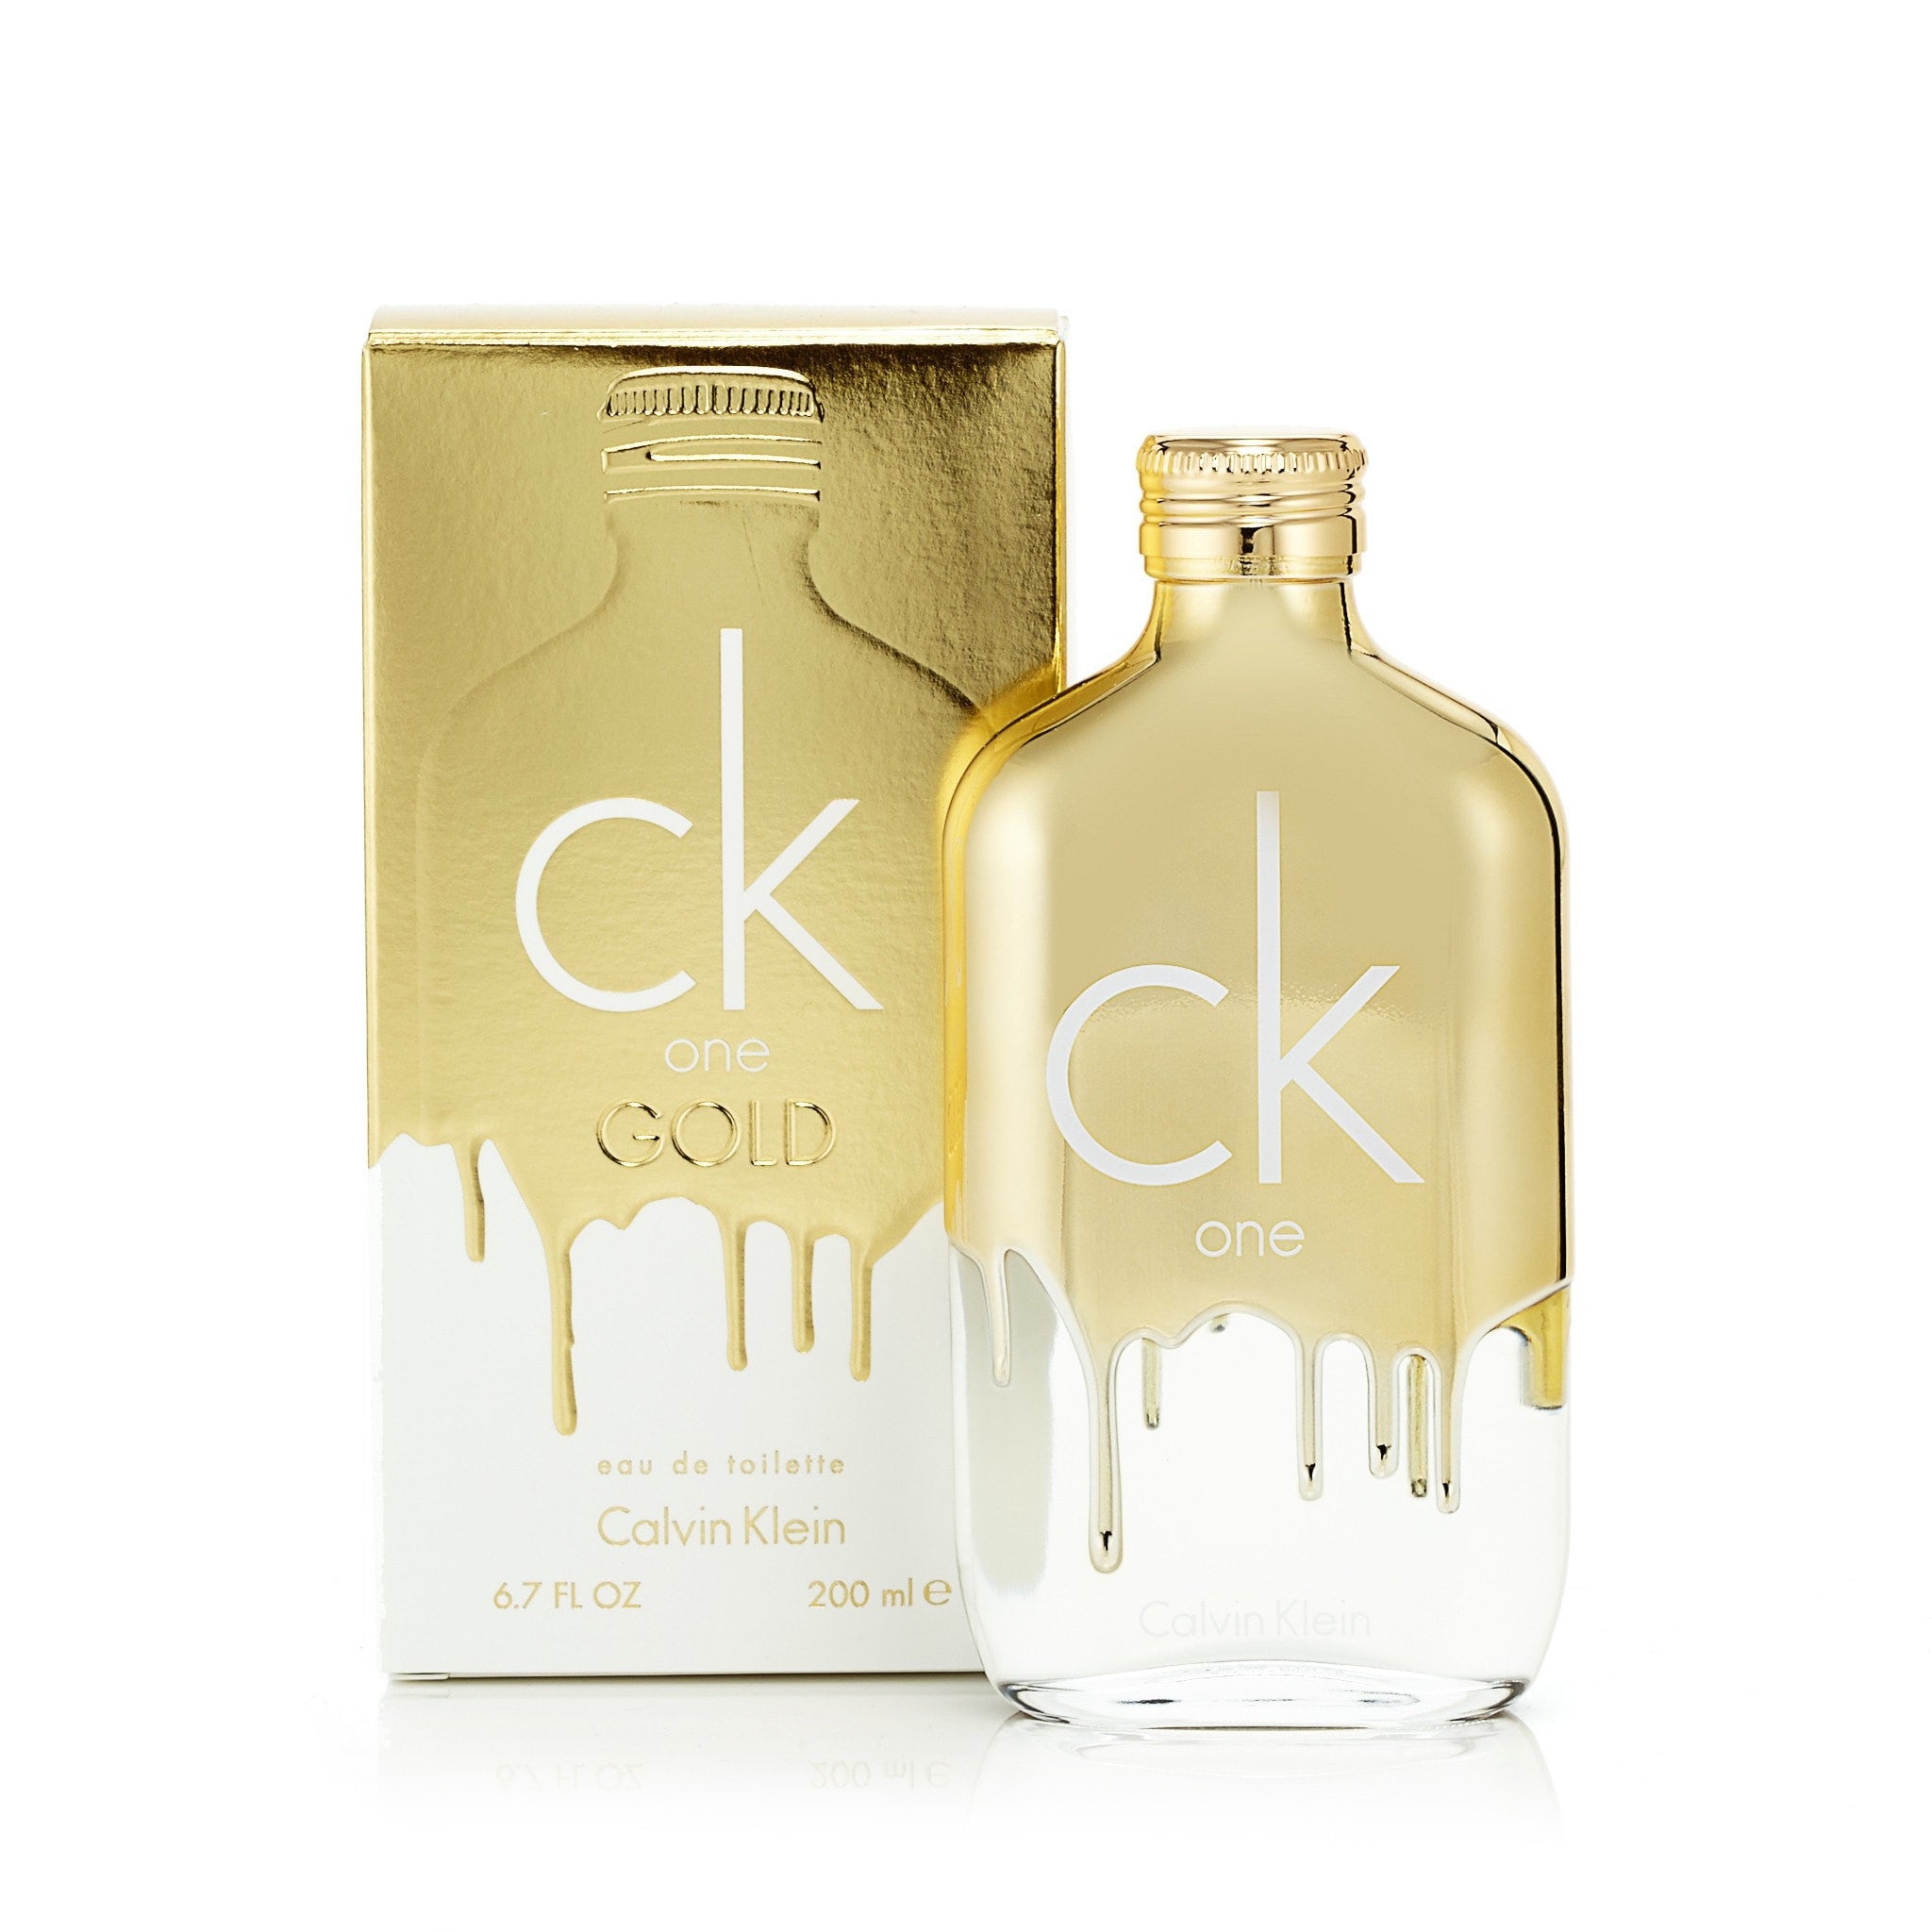 Calvin Klein CK Be Eau De Toilette Spray, Cologne for Men, 6.7 oz 